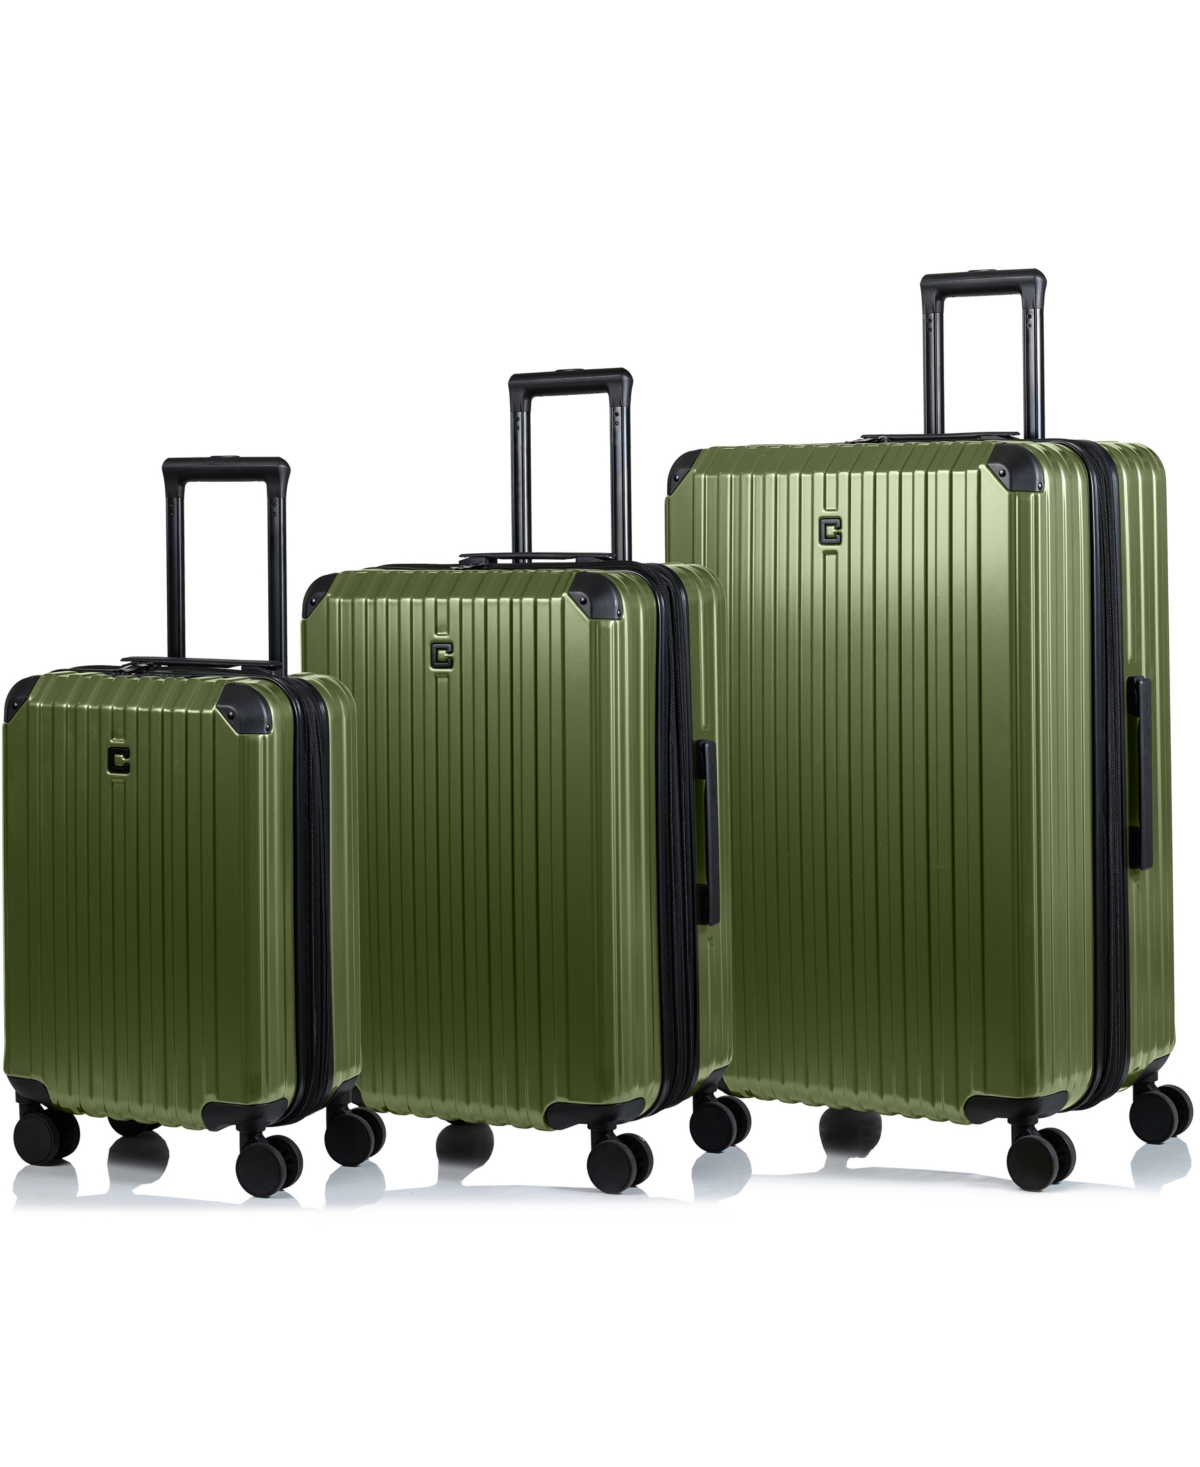 3 Piece Element Hardside Luggage Set - Copper